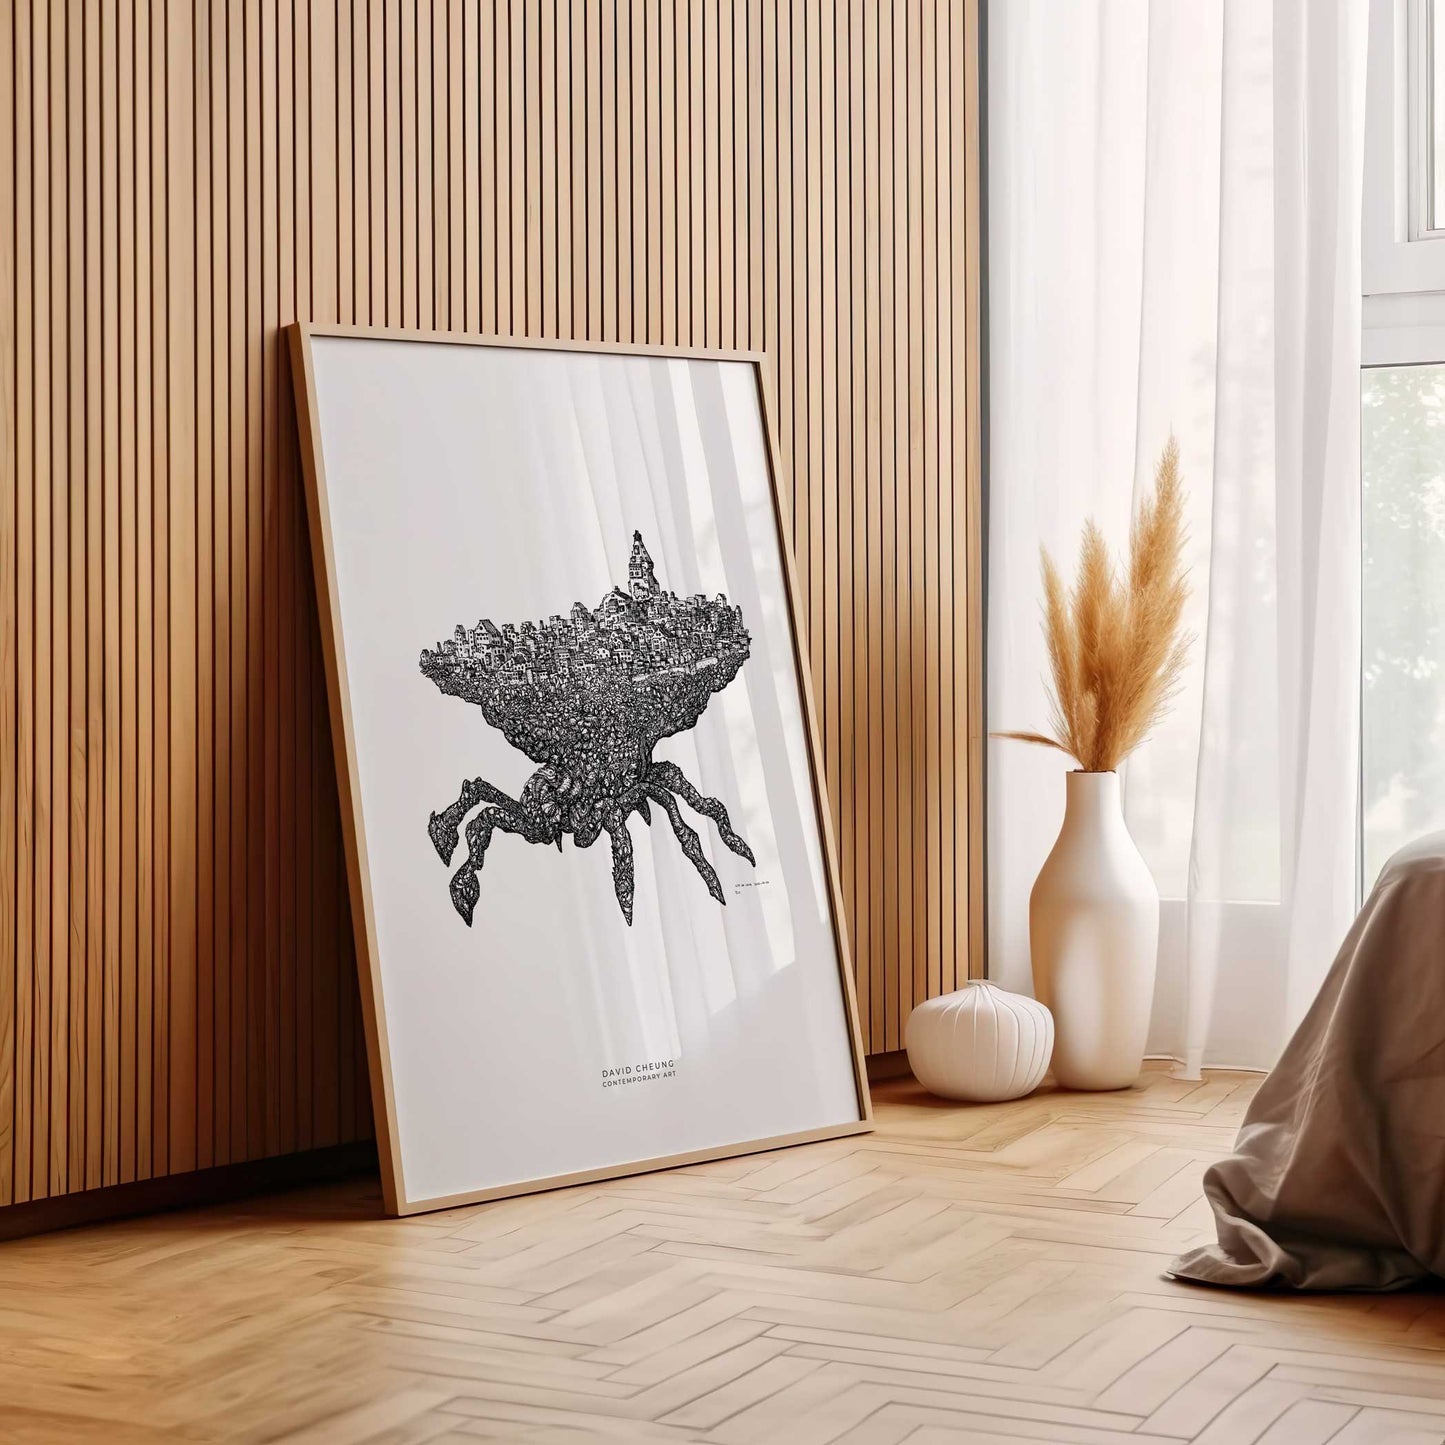 Art print "The Crab"